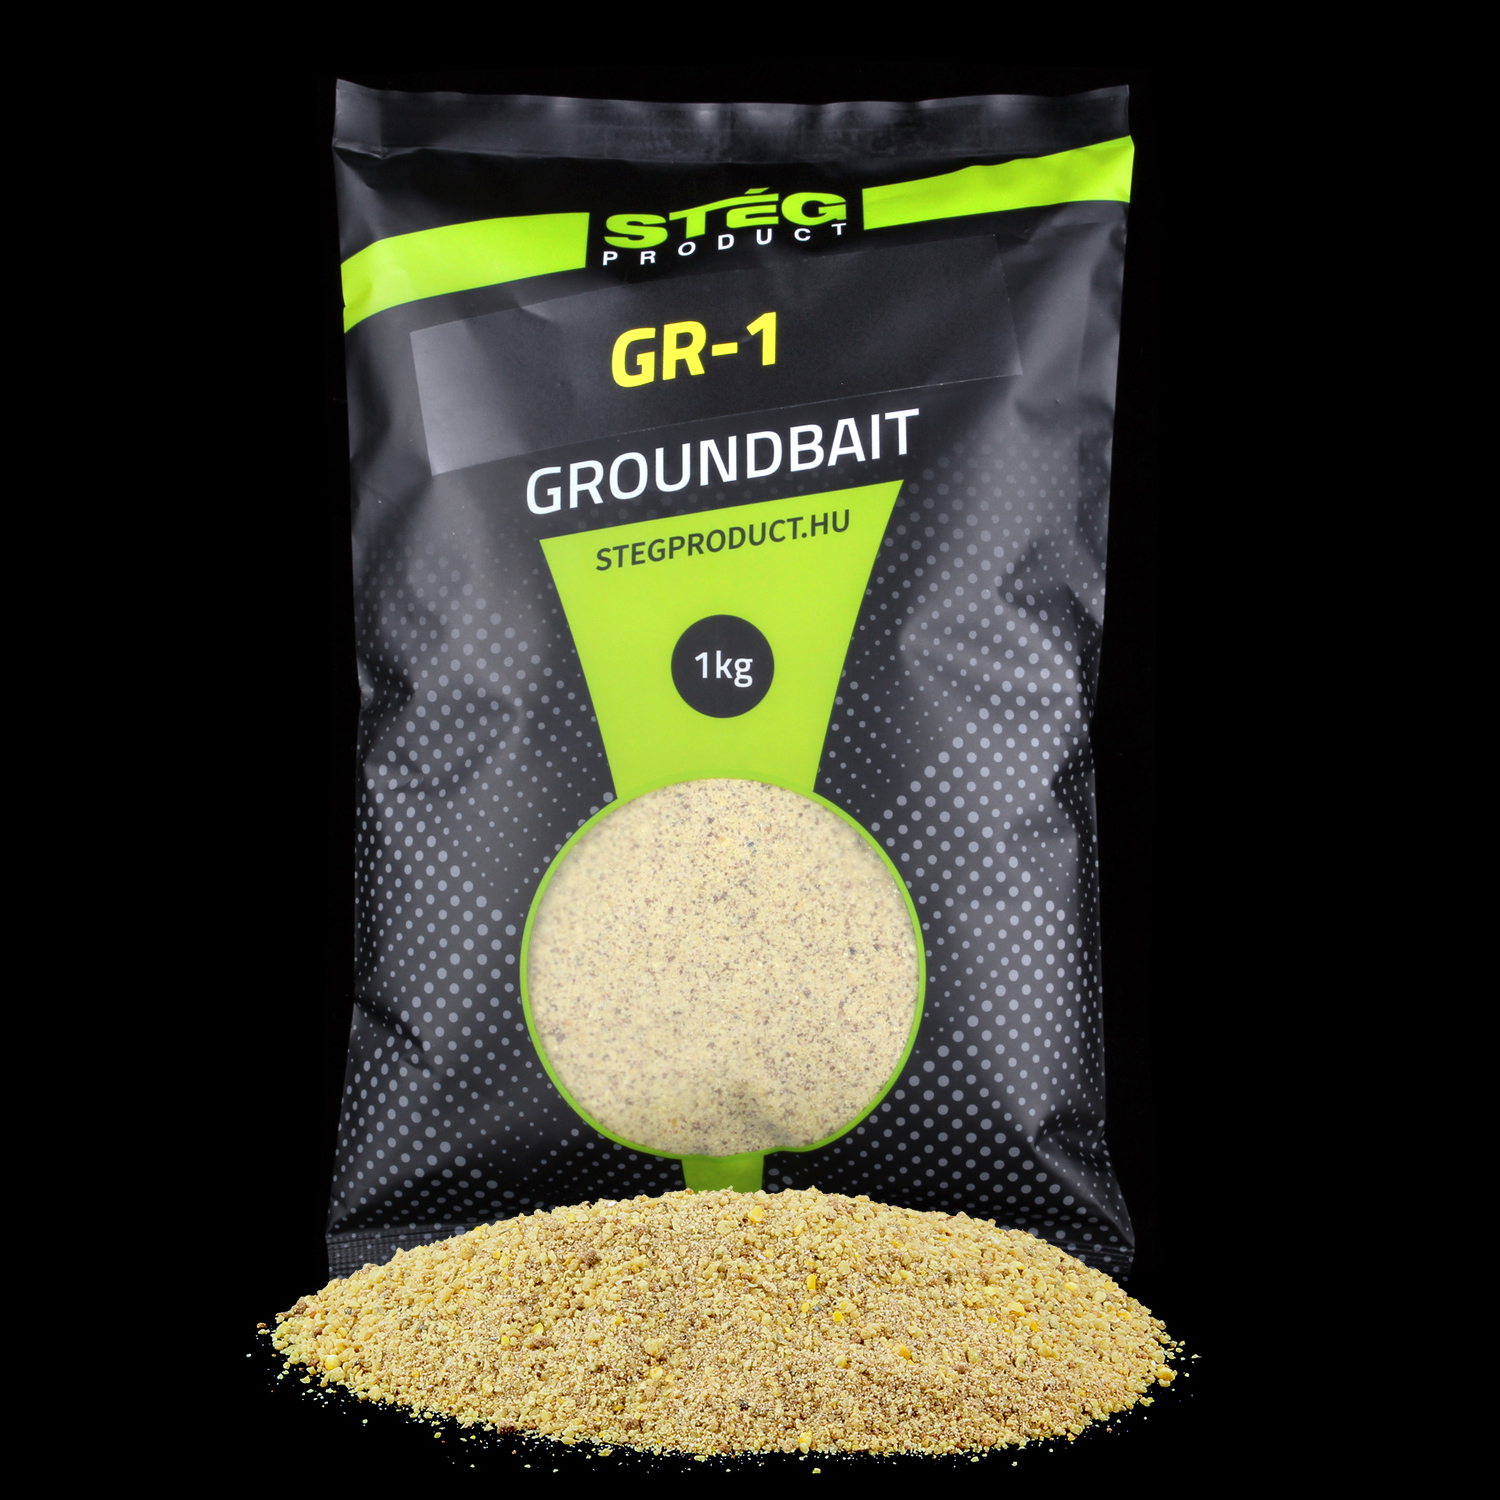 Stg Product Groundbait GR-1 1kg